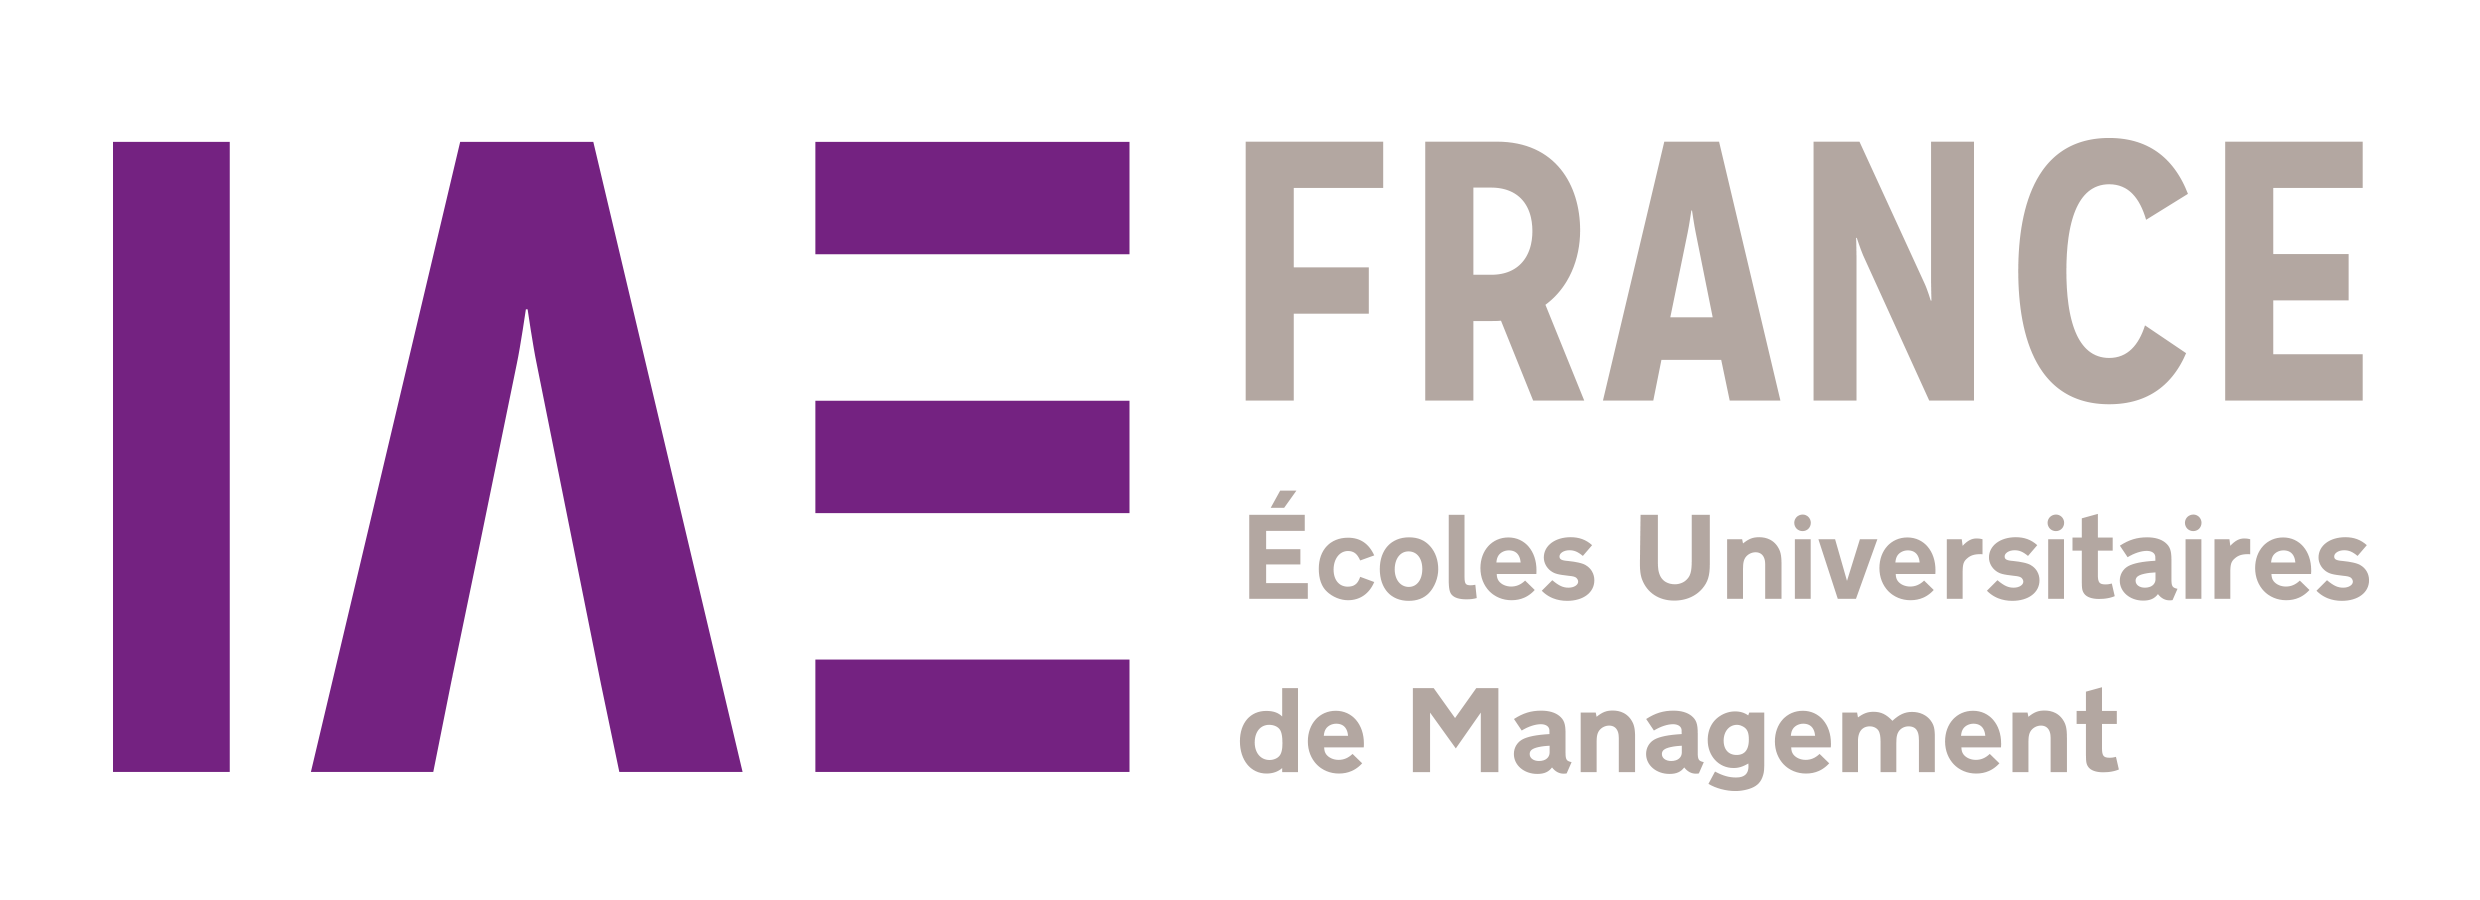 IAE FRANCE logo